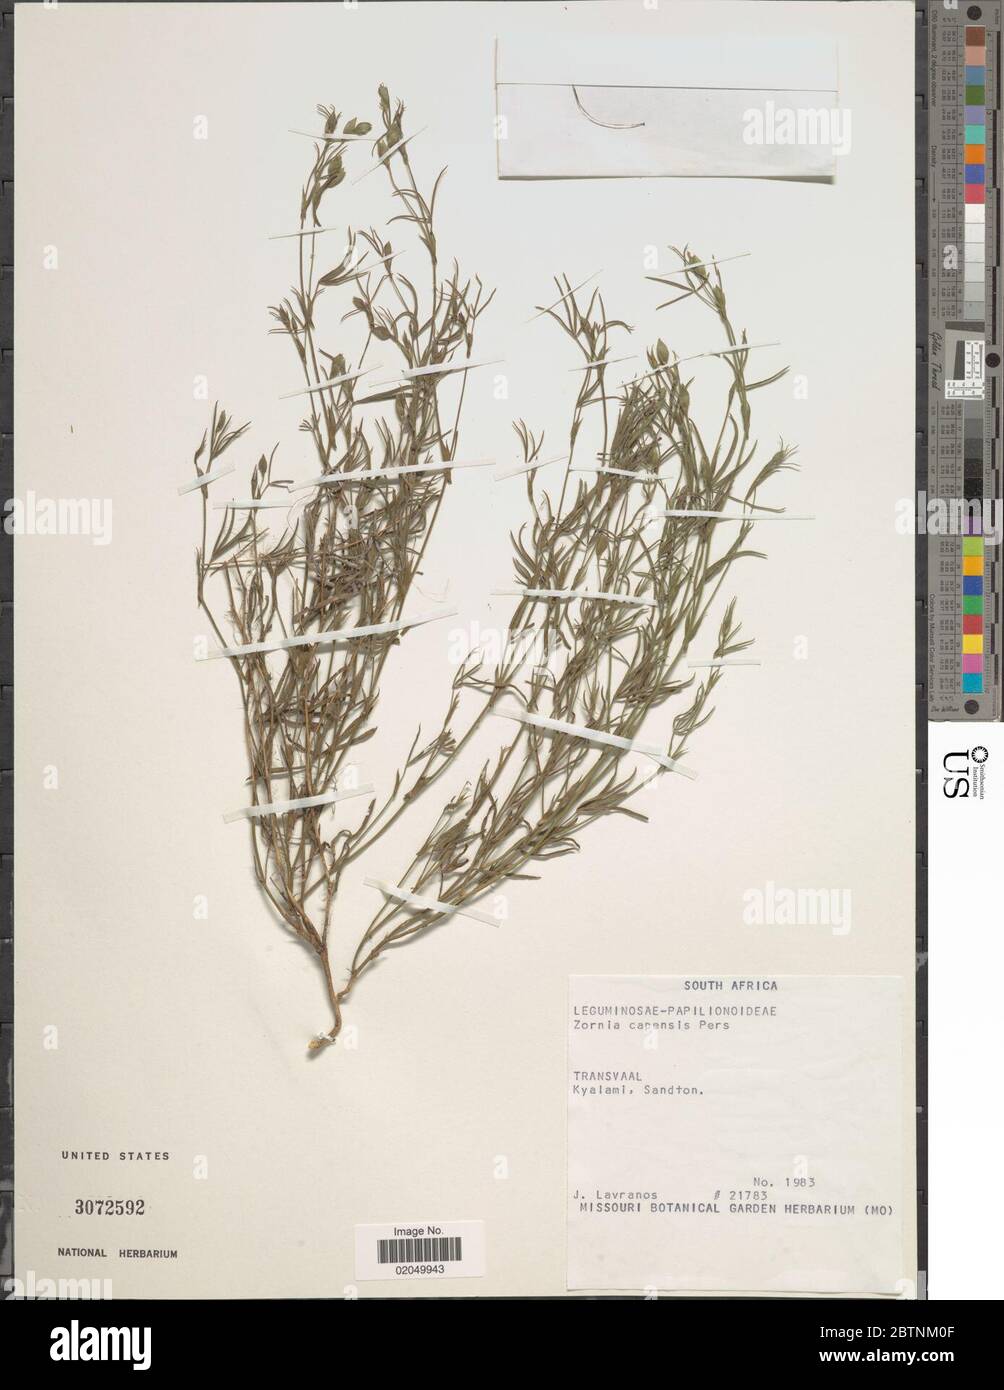 Zornia capensis Pers. 11 Jan 20181 Stock Photo